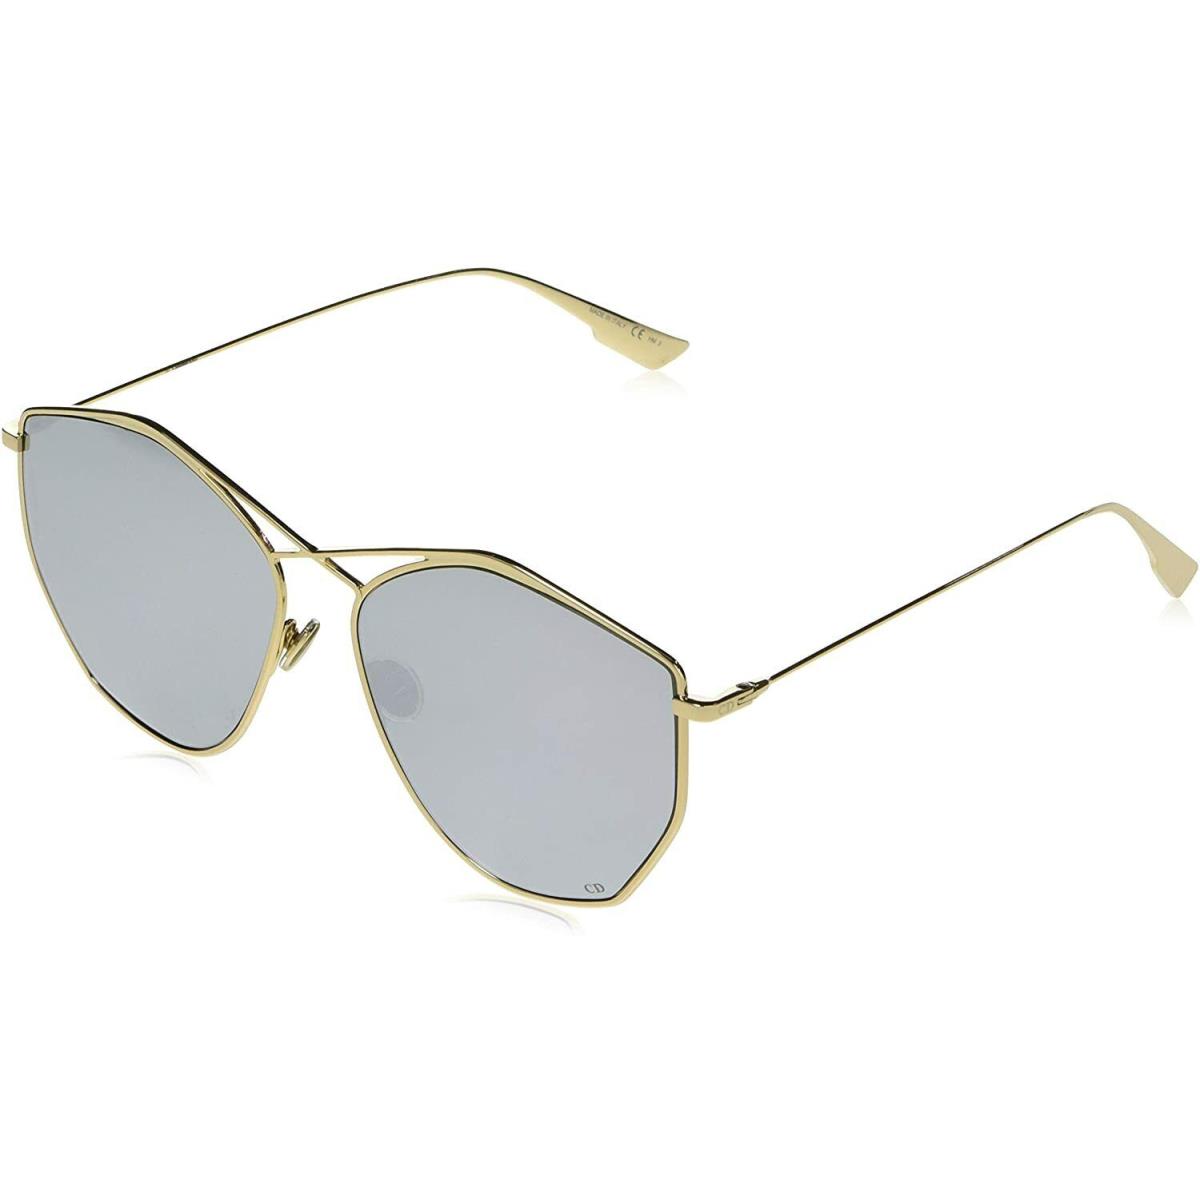 Dior Sunglasses DIORSTELLAIRE4 J5G-DC 59mm Gold / Silver Mirror Lens - Gold Frame